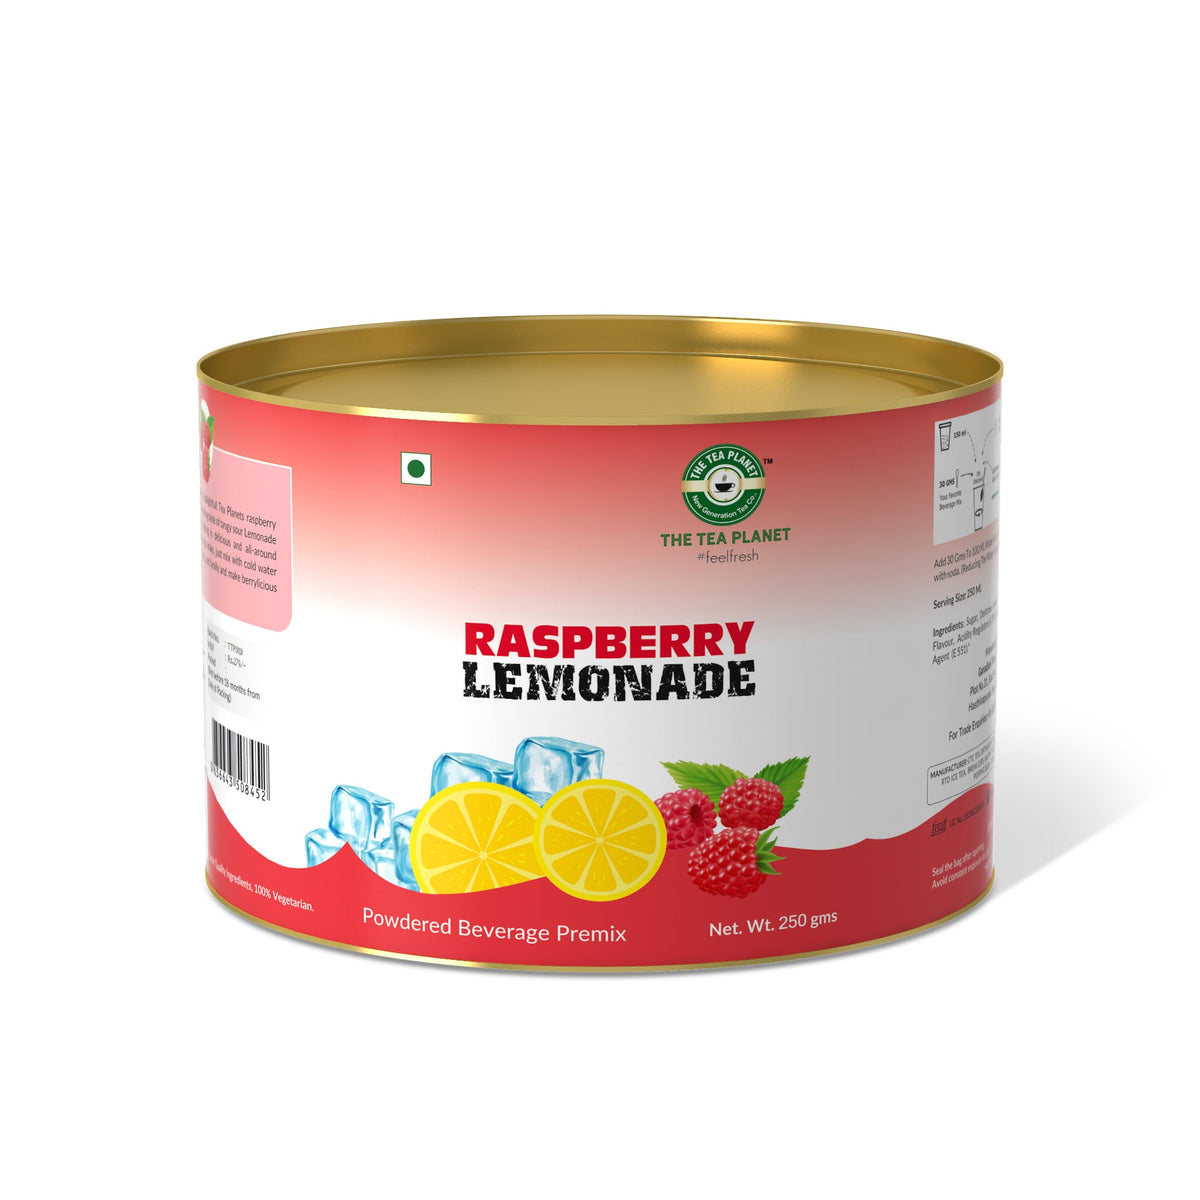 Raspberry Lemonade Premix